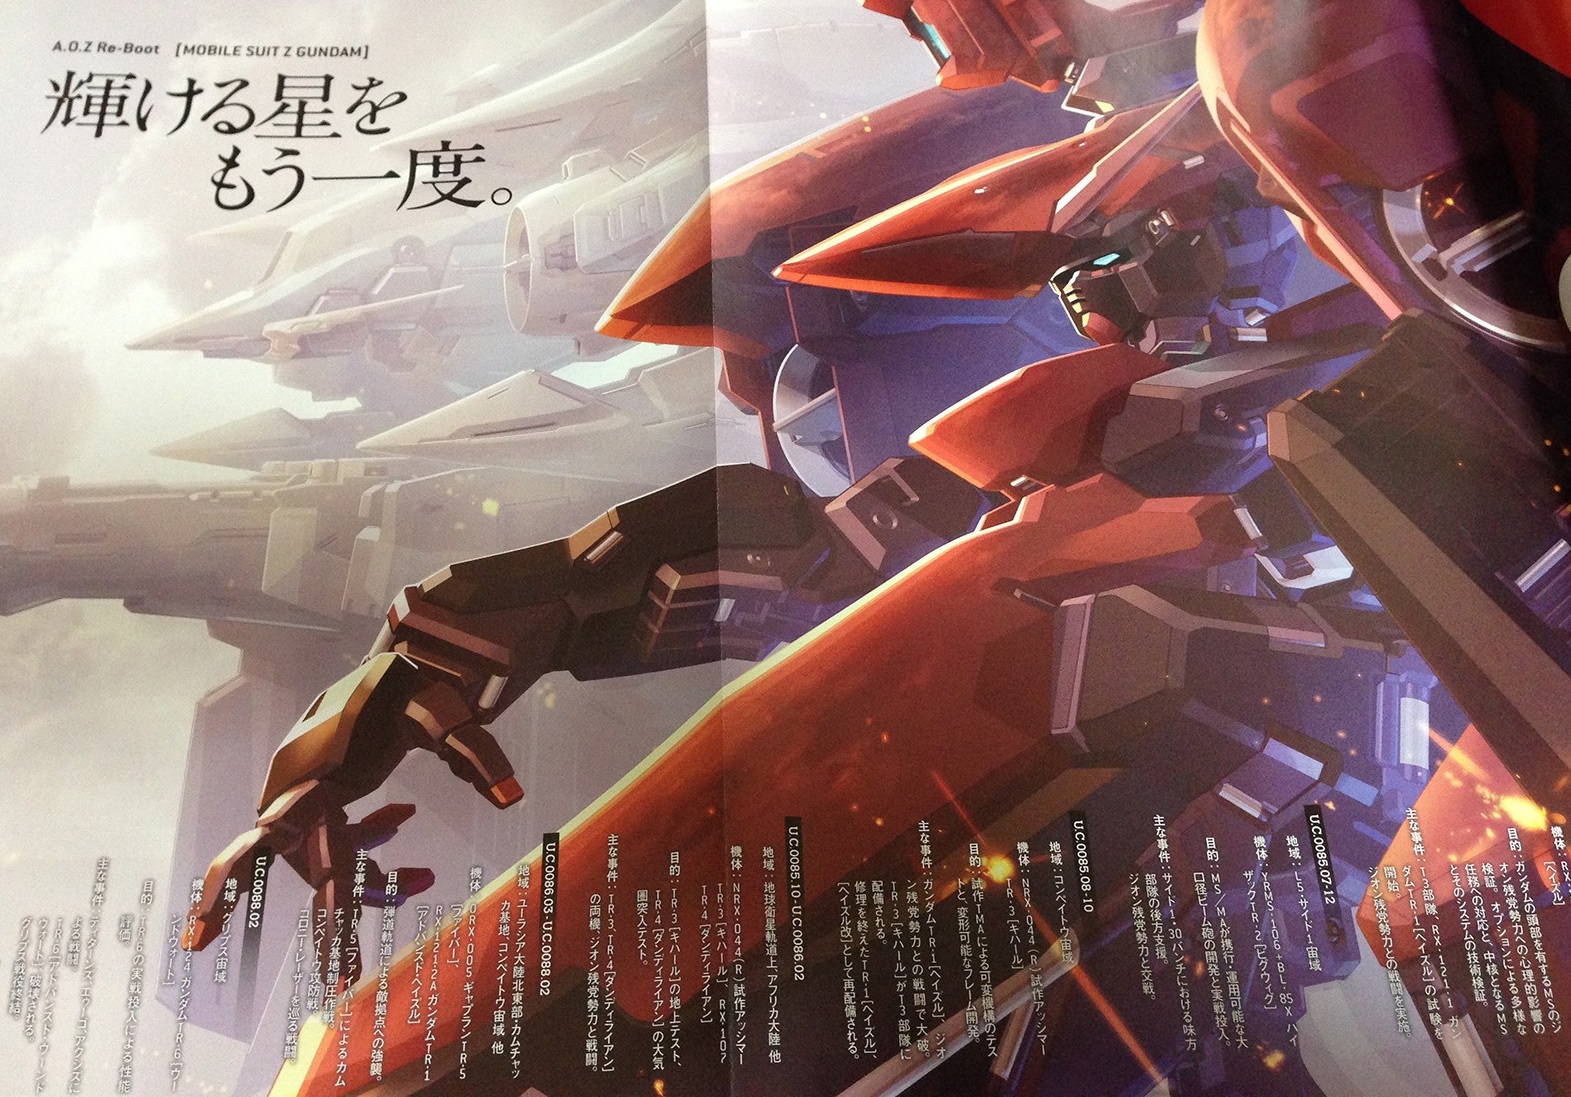 Mobile Suit Z Gundam Advance Of Zeta A O Z Re Boot No 12 Wallpaper Size Images Some Smaller Gunjap